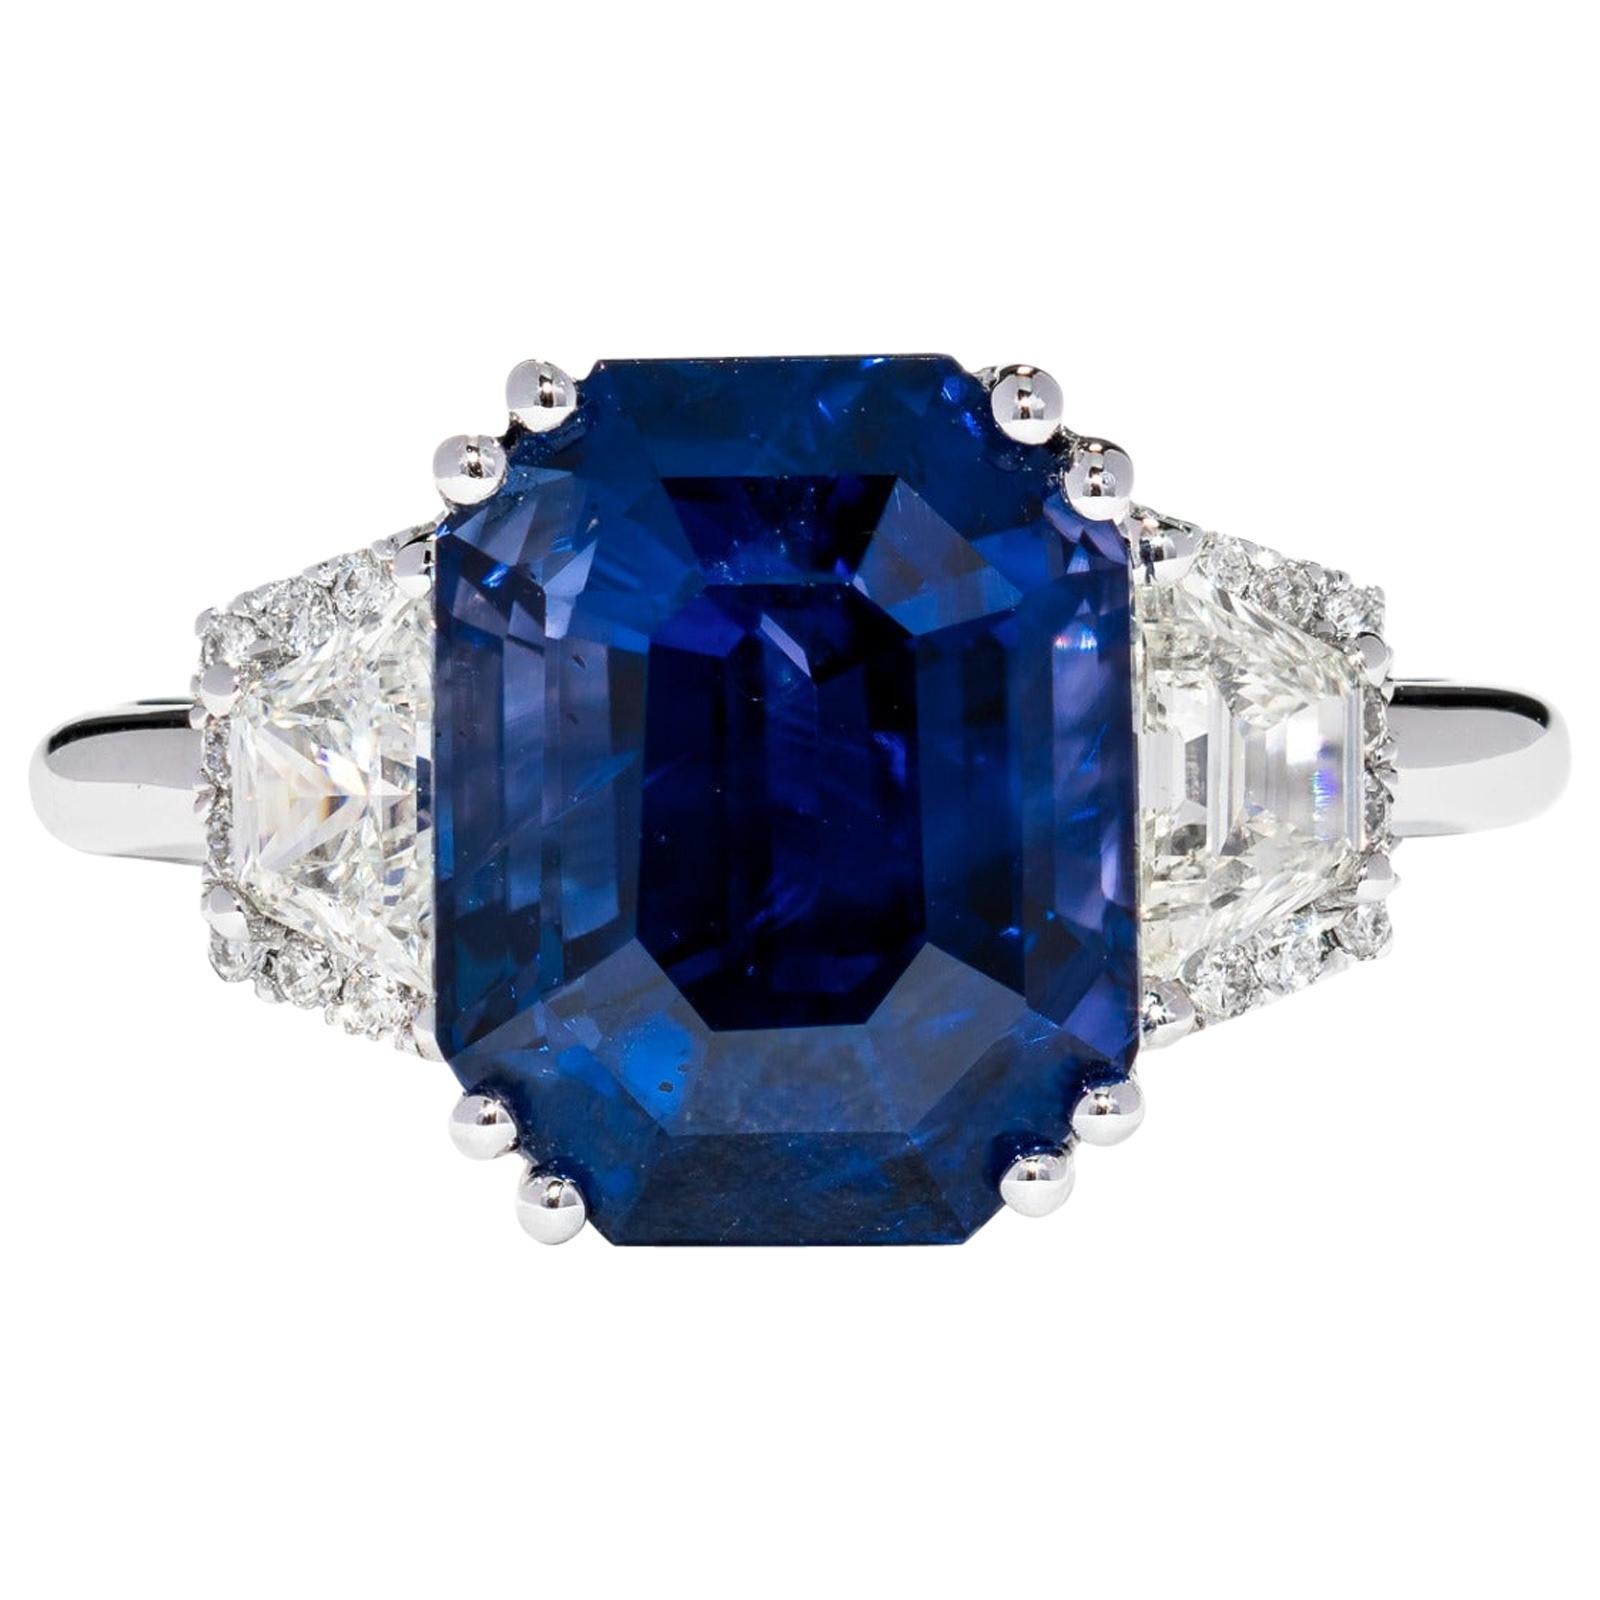 7.05 Carat Royal Blue Sapphire GRS Certified Non Heated Diamond Ring Octagon Cut